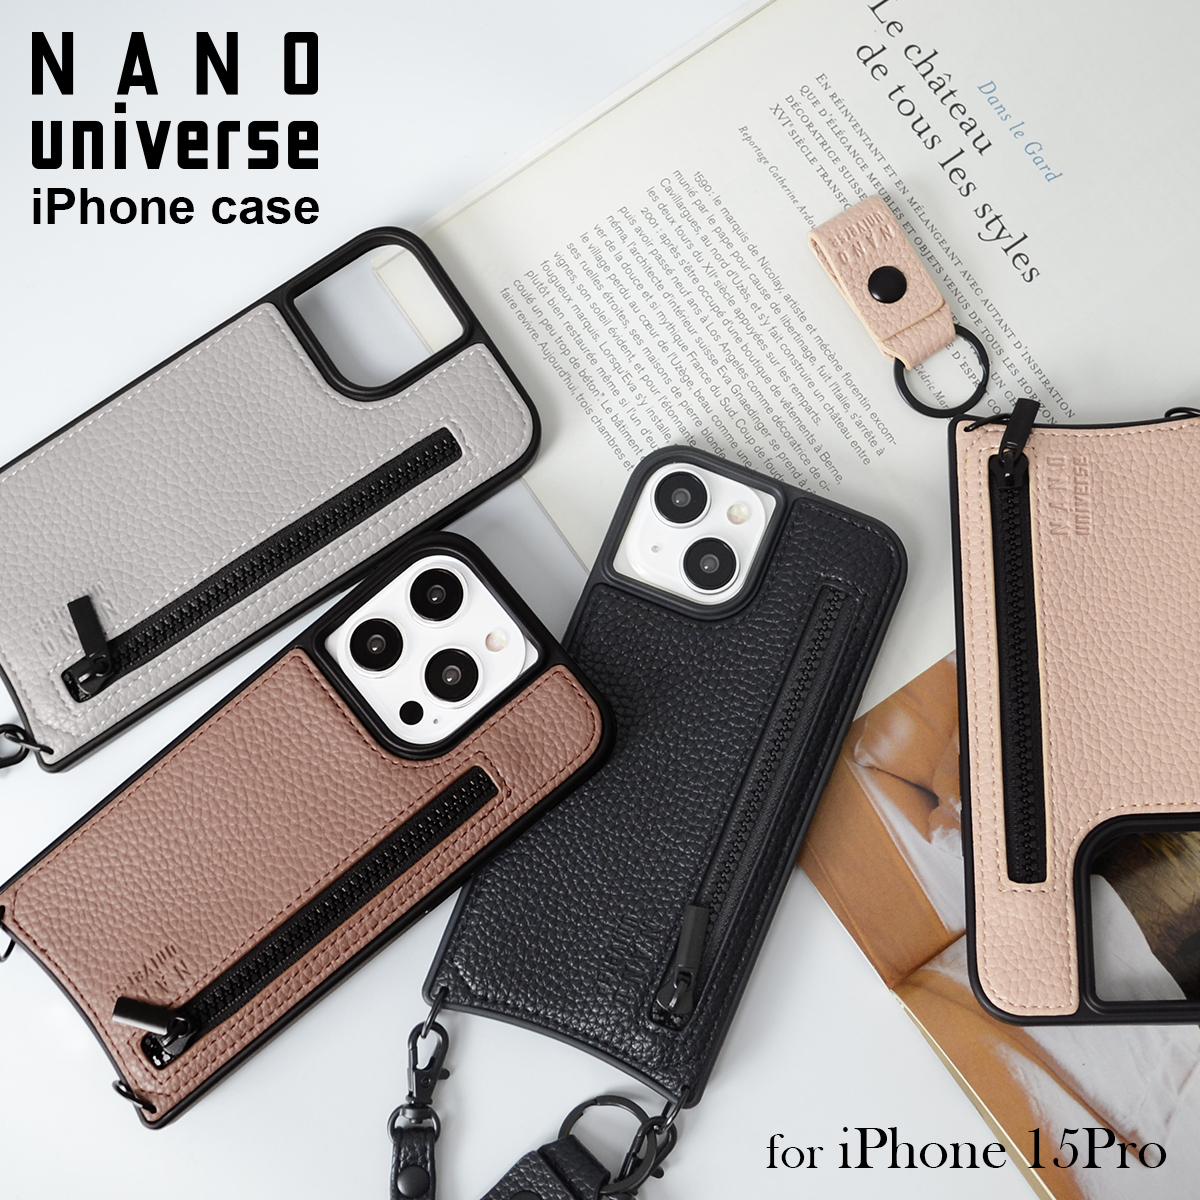 iPhone 15 Pro】nano universe [背面ケース/ストラポケット] | ナノ ...